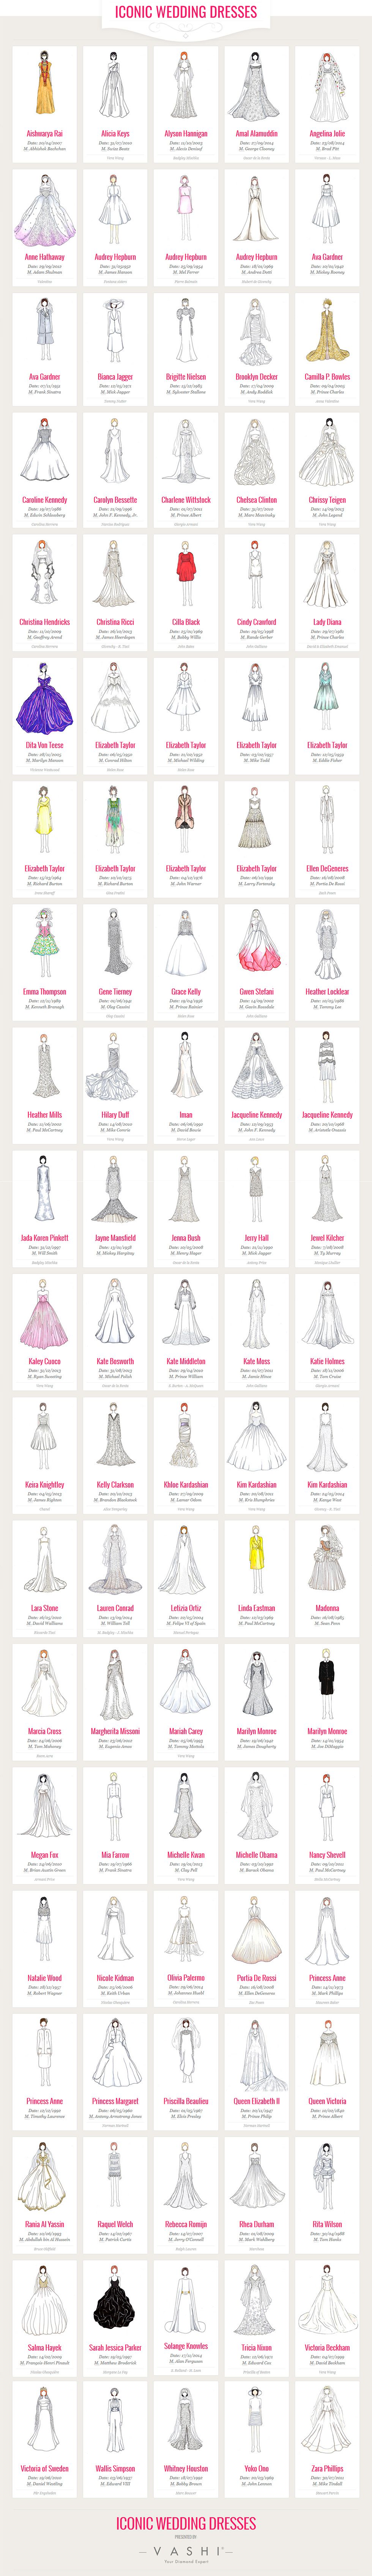 100 most iconic wedding dresses infographic